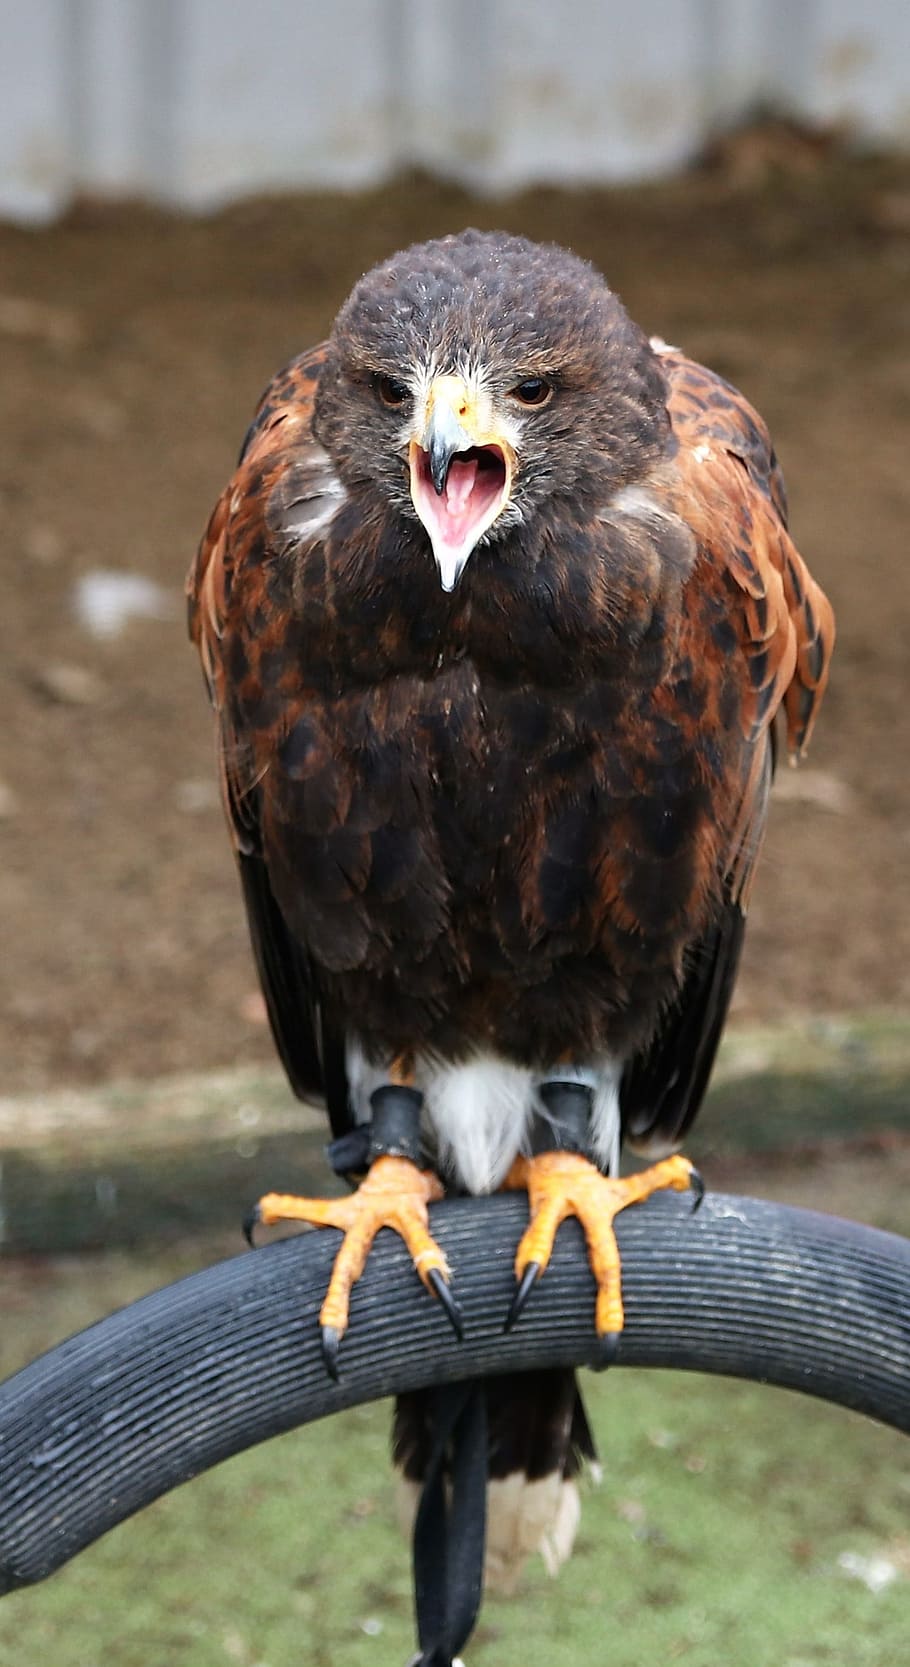 harris hawk, raptor, eagle, prey, wildlife, bird, falconry, predator, hawk, vertebrate